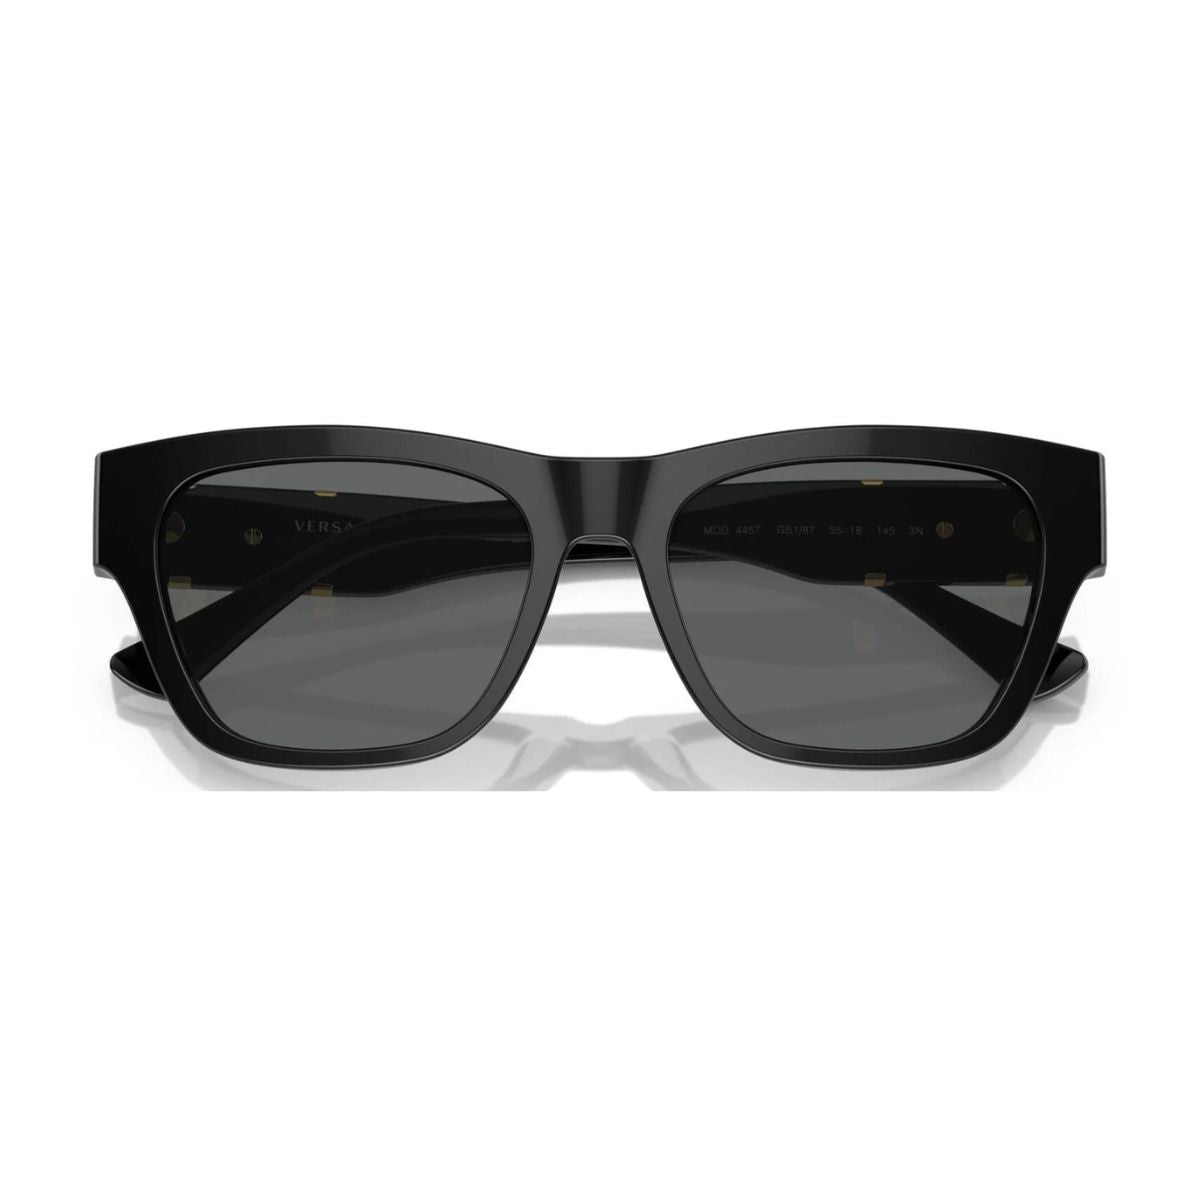 "Stylish Versace 4457 GB1/87 UV Blocking Eyewear sunglass for Men At Optorium"